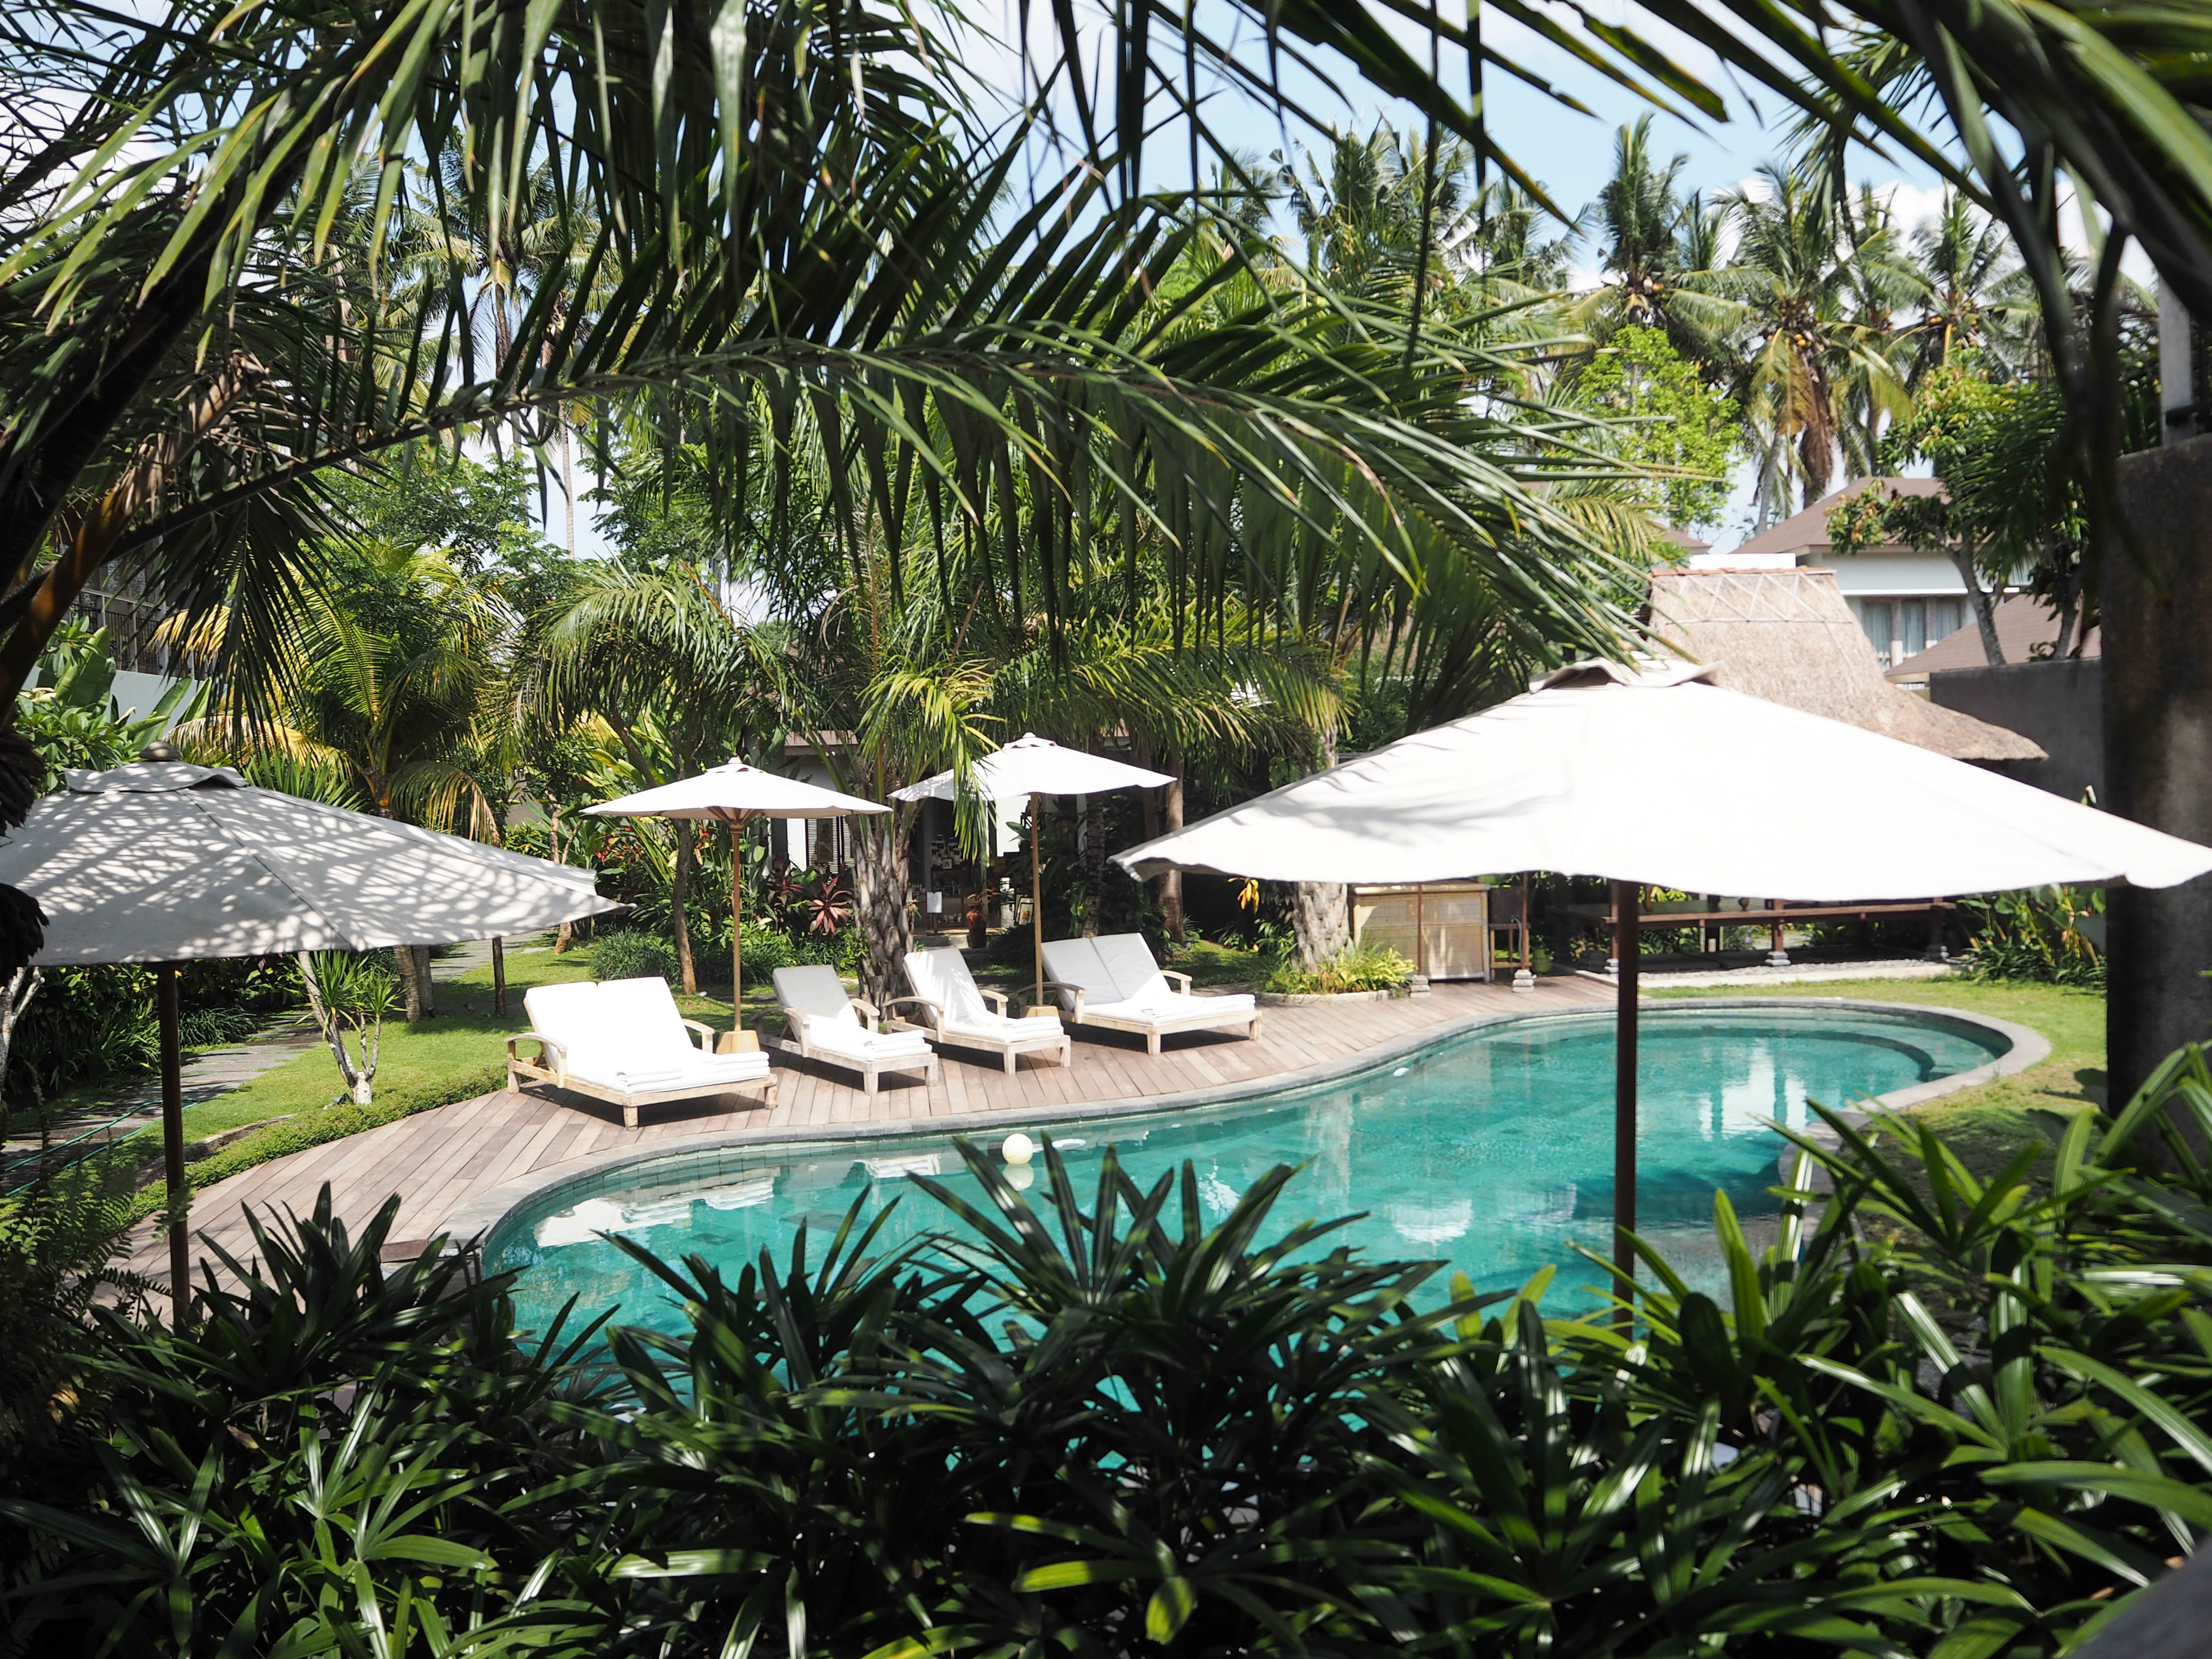 HOTEL REVIEW: Anulekha Hotel in Ubud, Bali